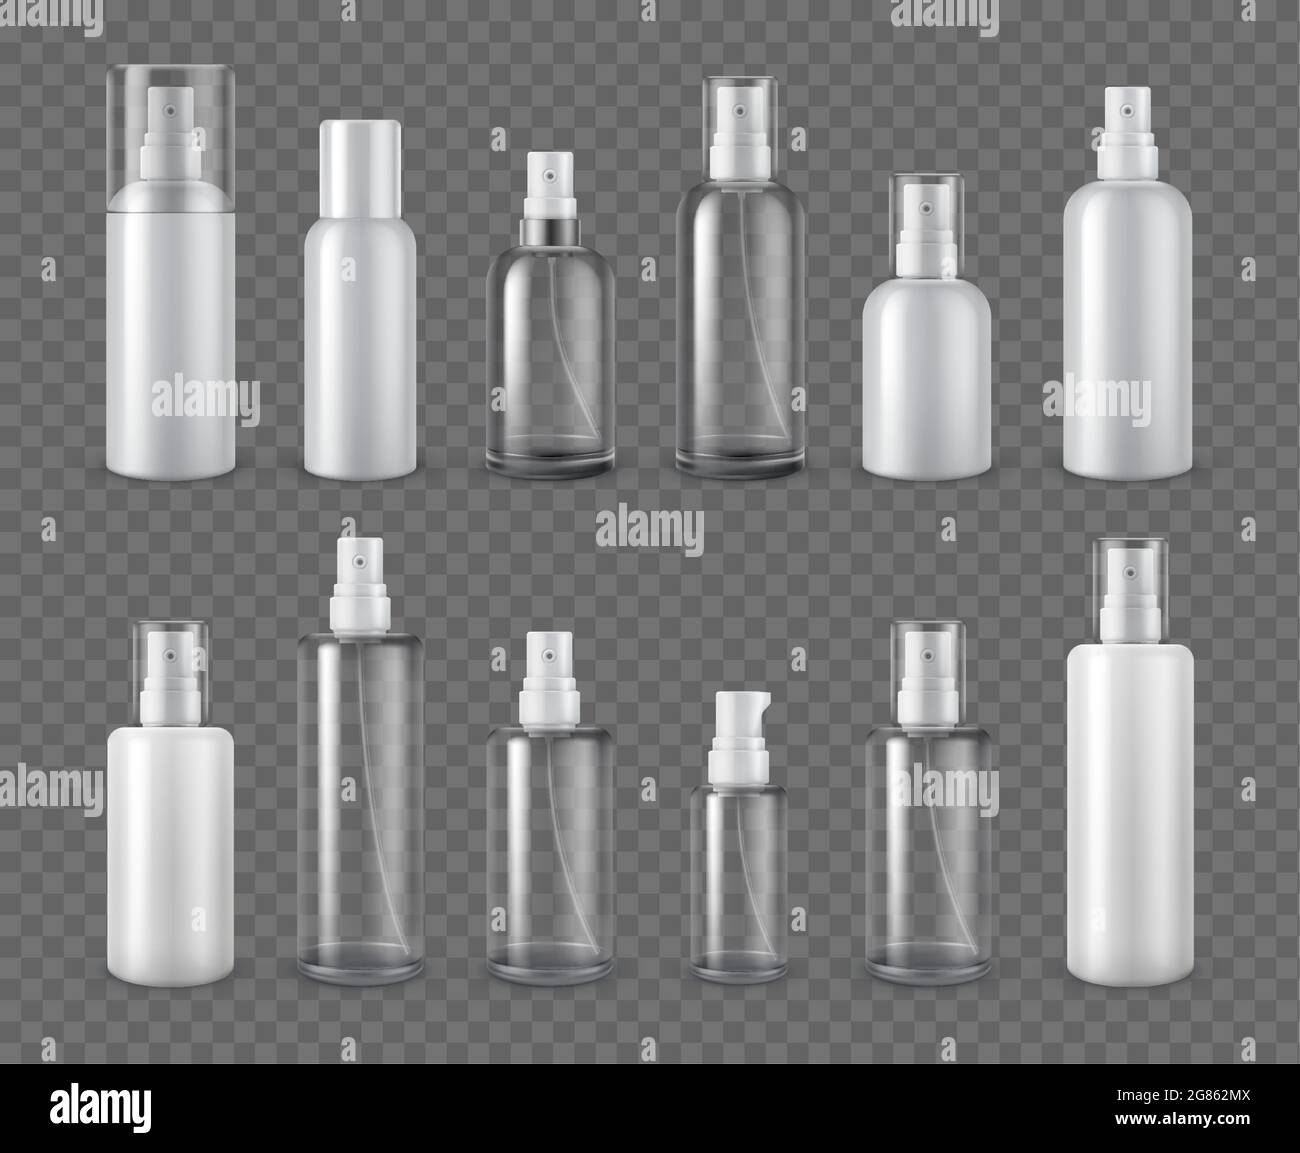 Spray bottles. Realistic cosmetic aerosol, deodorant or sprayer clear bottle package mockups. 3d plastic cream dispenser with cap vector set Stock Vector